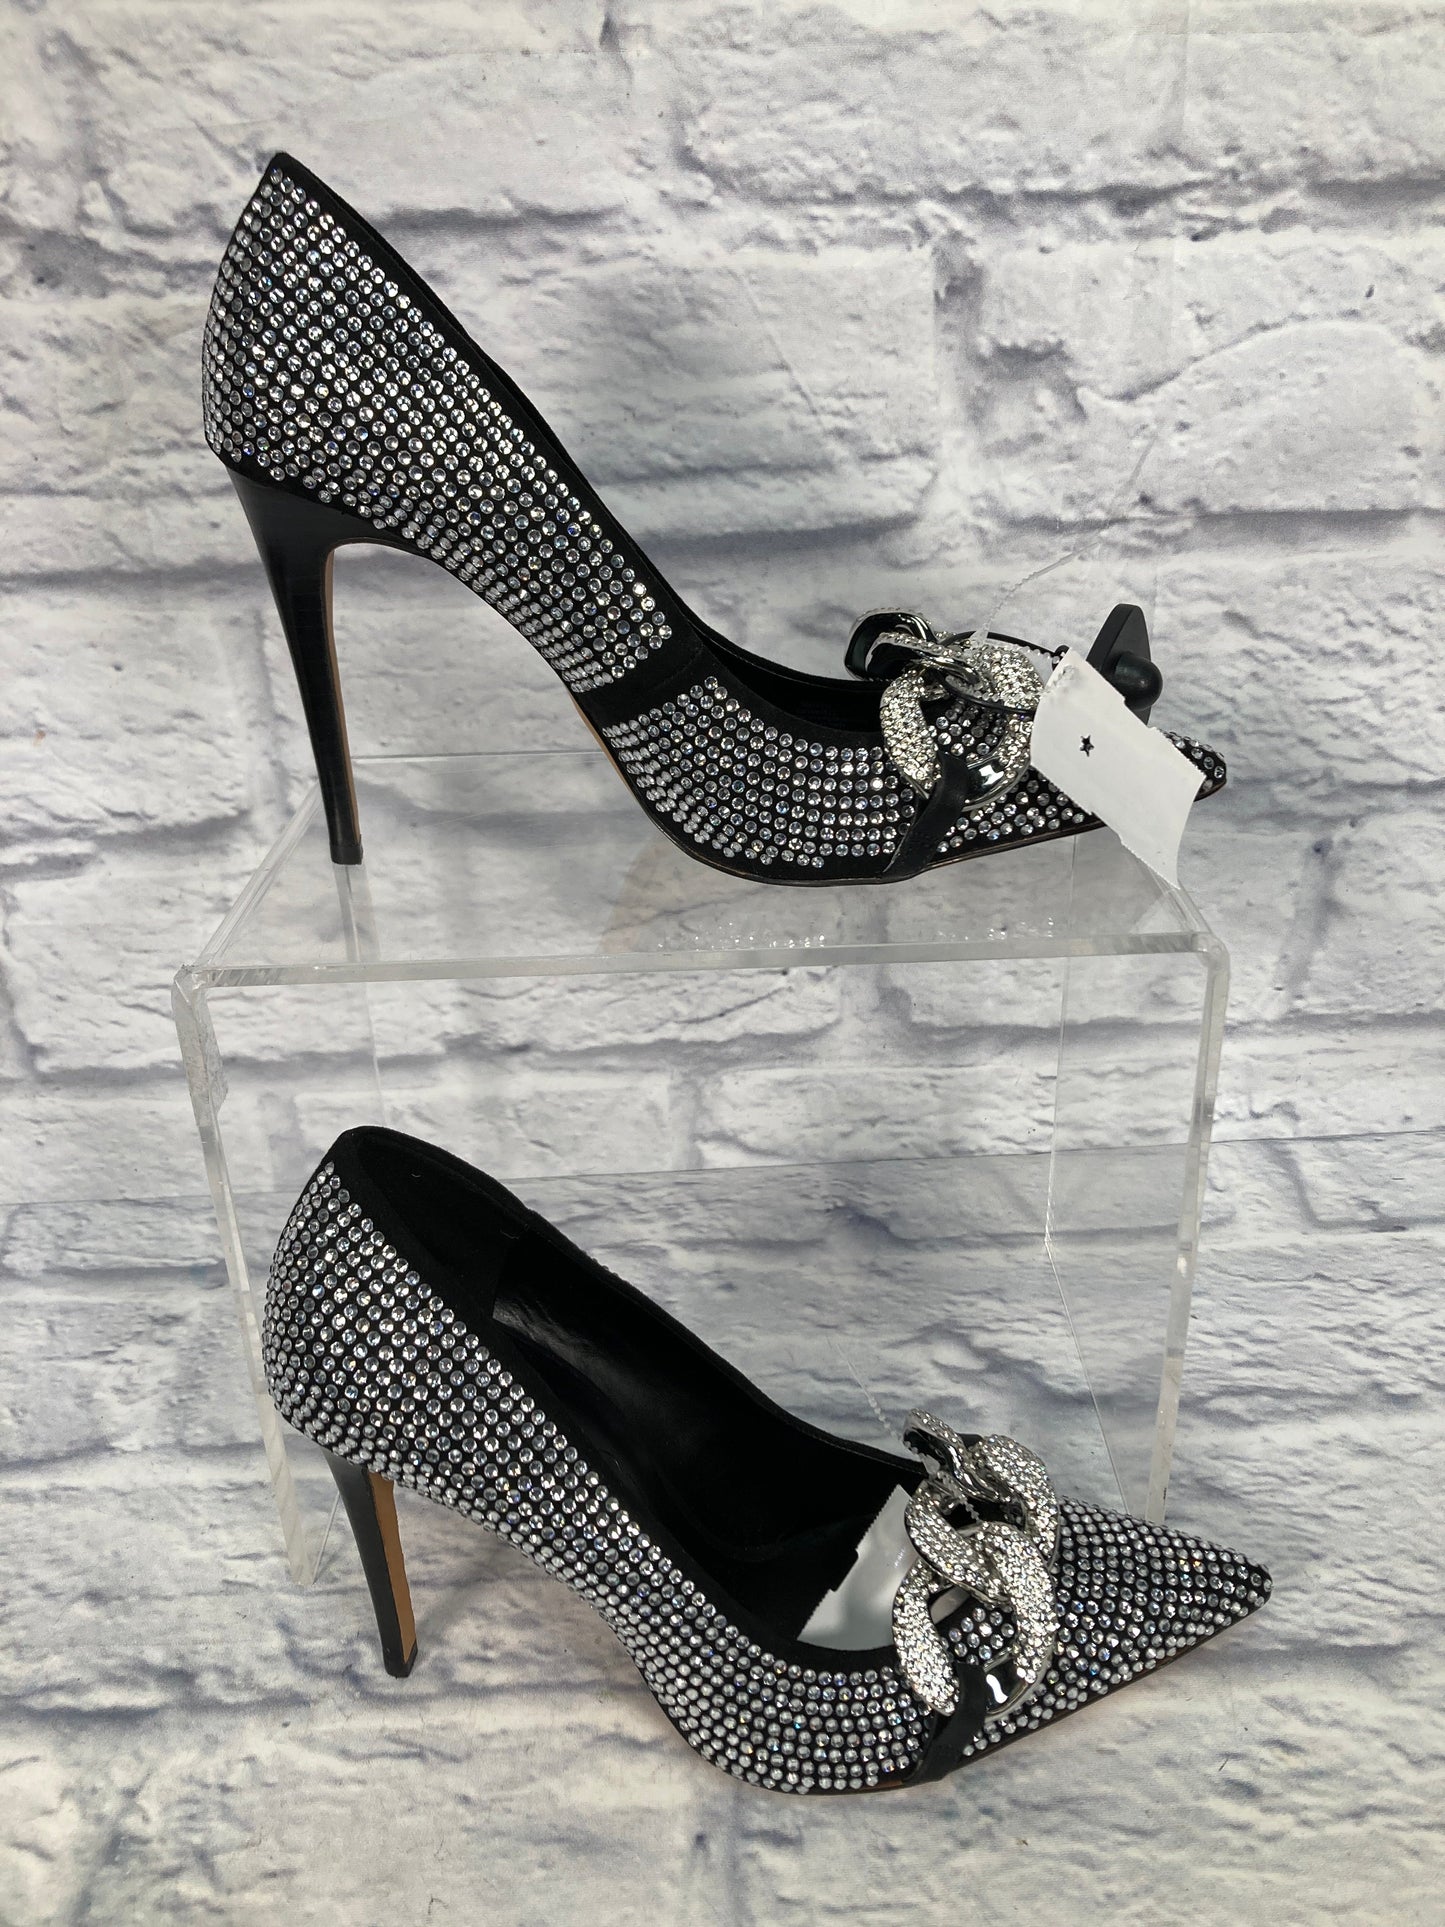 Black & Silver Shoes Heels Stiletto Karl Lagerfeld, Size 9